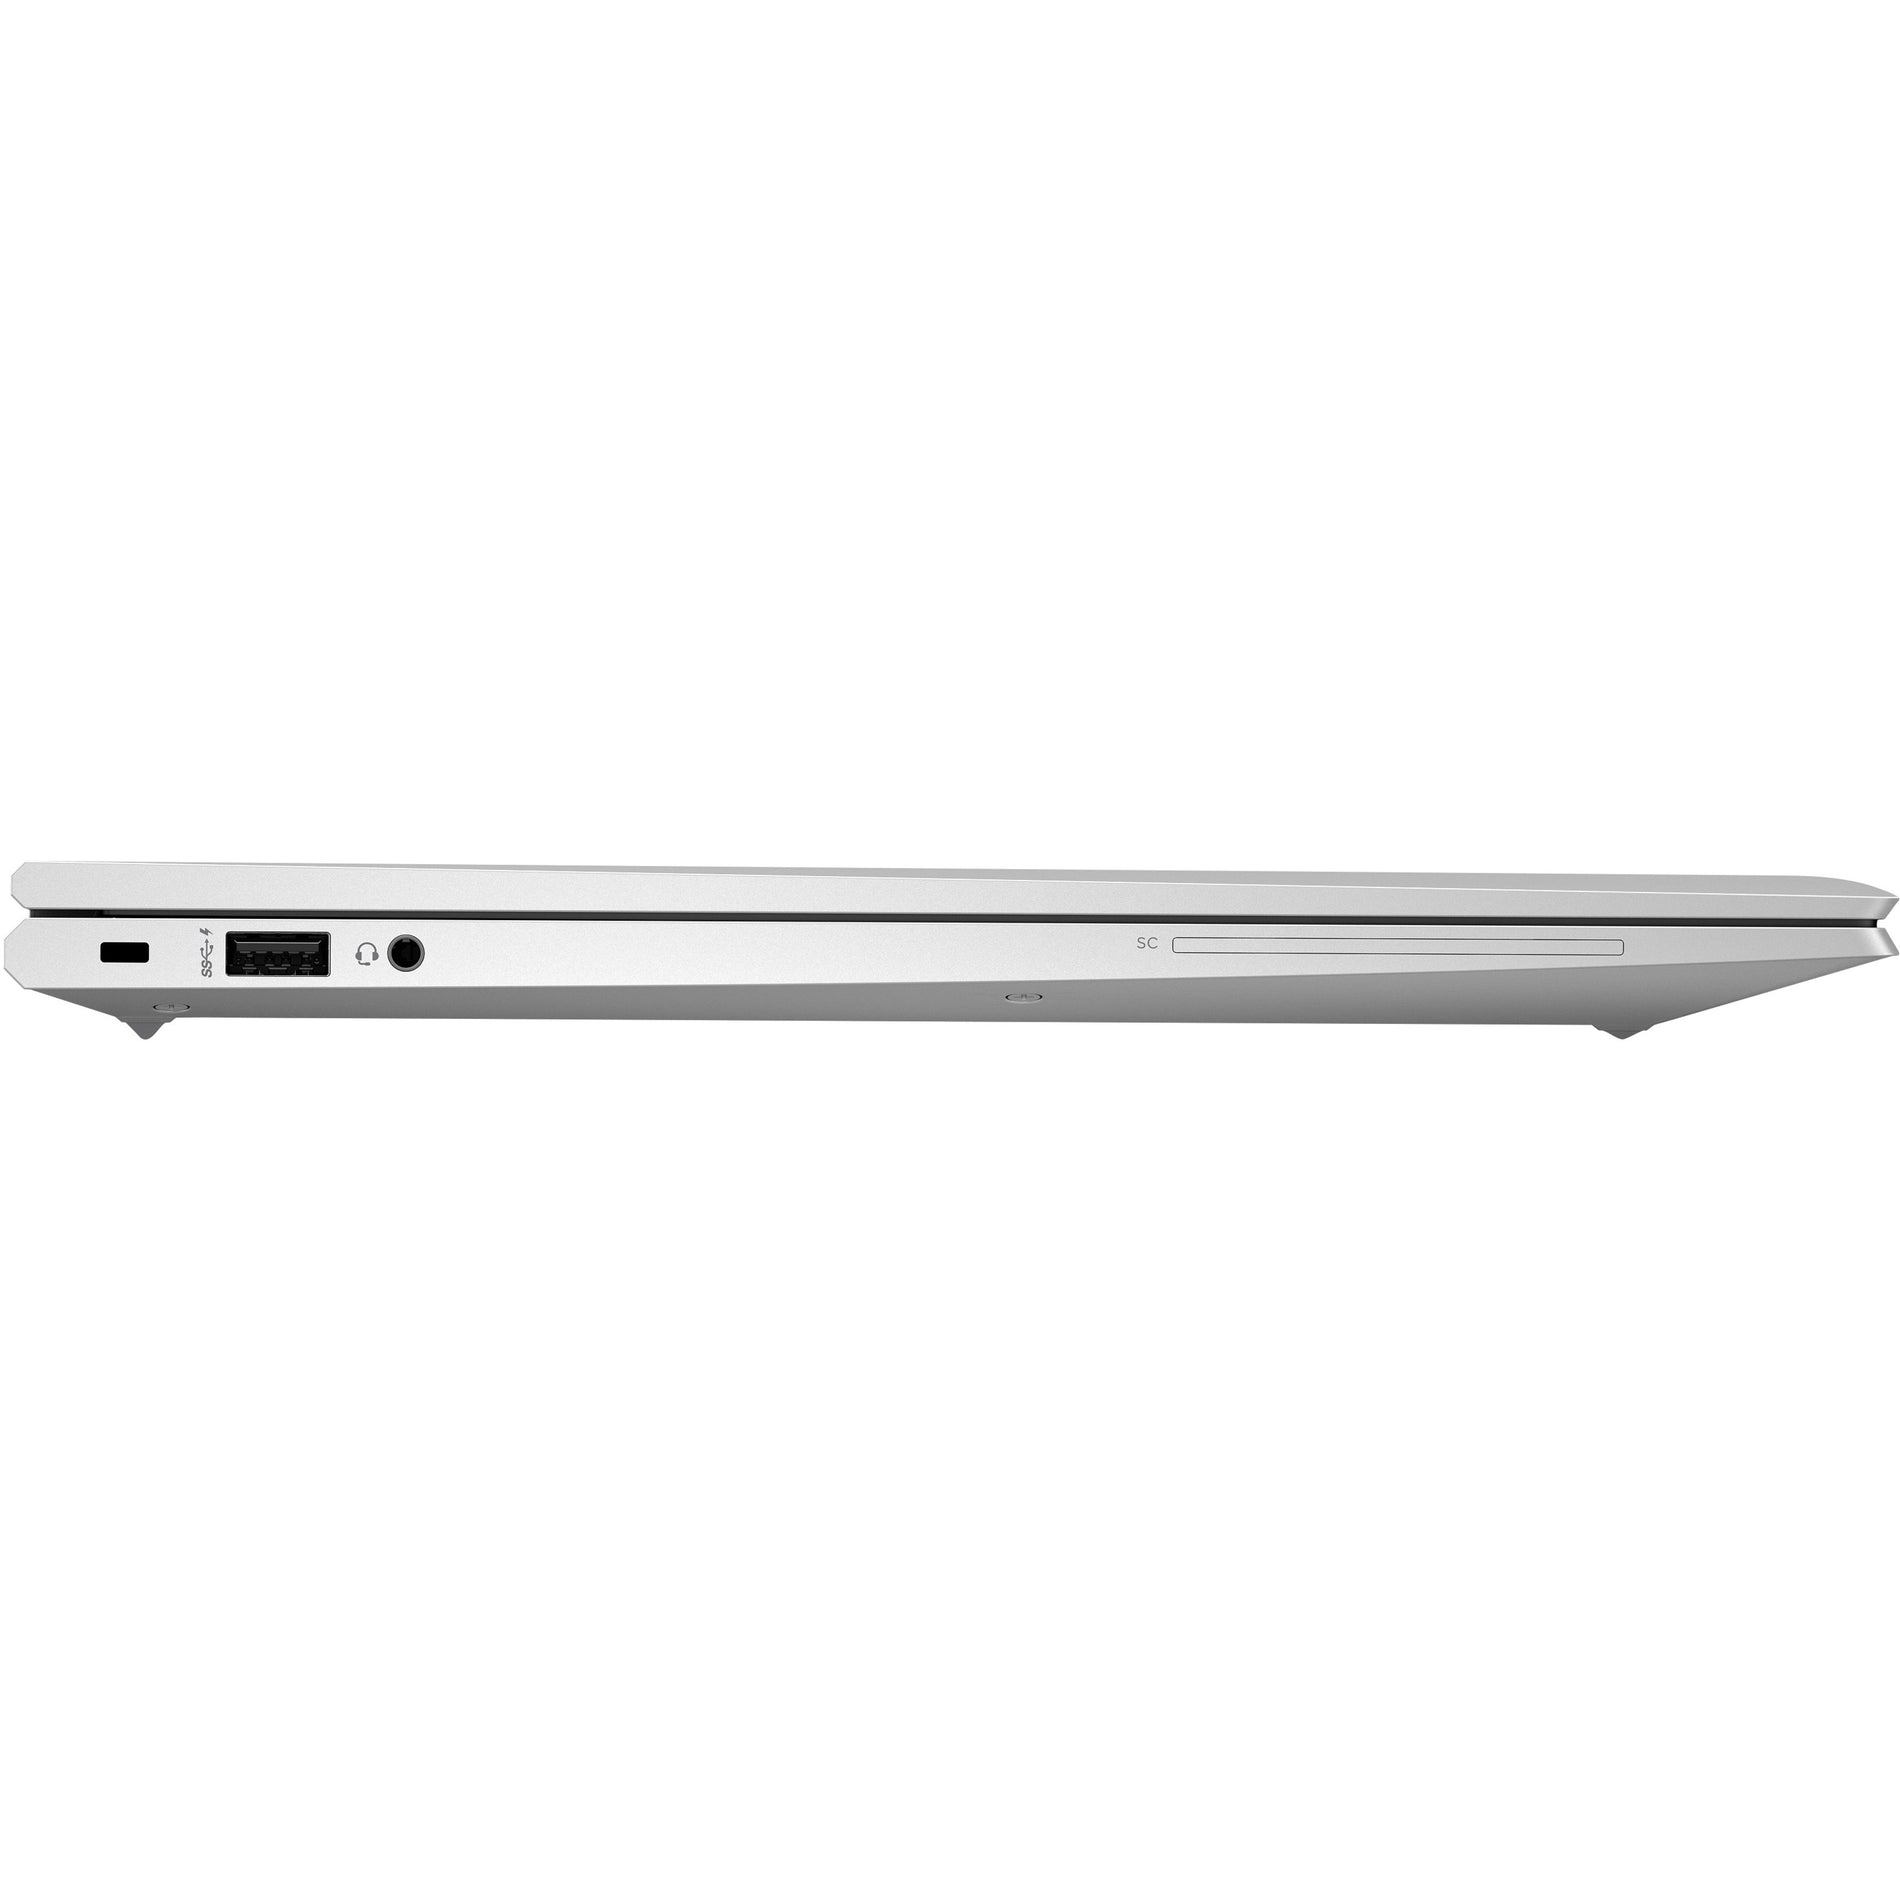 HP EliteBook 850 G8 Notebook PC, Intel i7-1165G7, 16GB RAM, 256GB SSD, 15.6" FHD, Windows 10 Pro